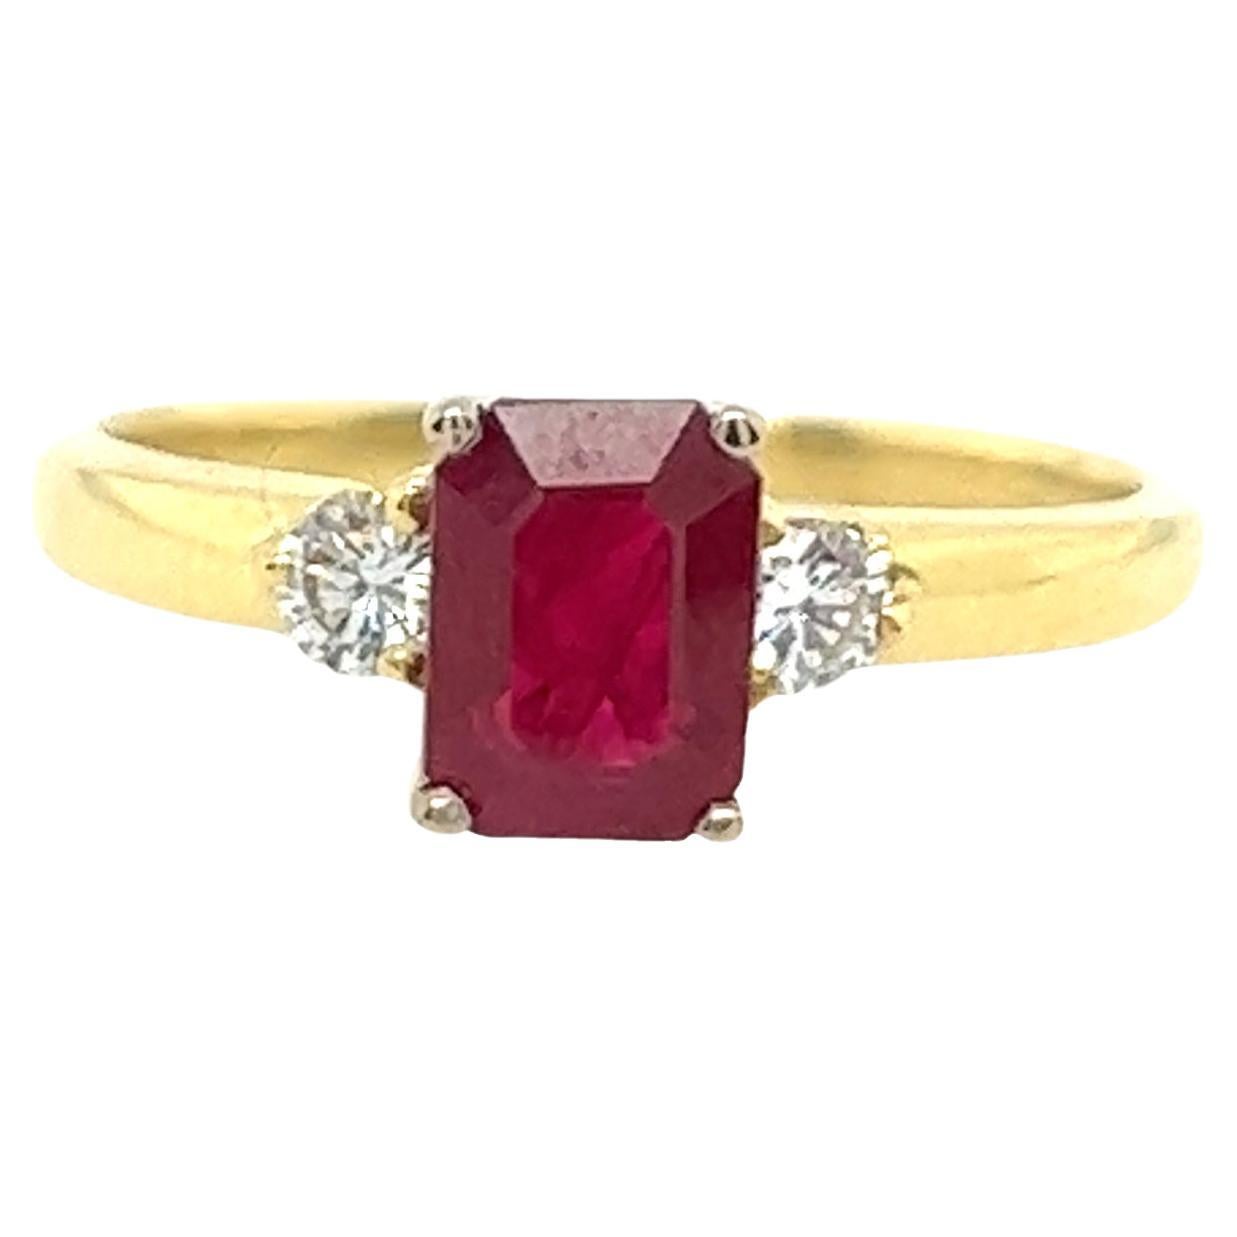 Vintage 18ct Yellow Gold Ruby & Diamond Ring Set With 2 Diamonds